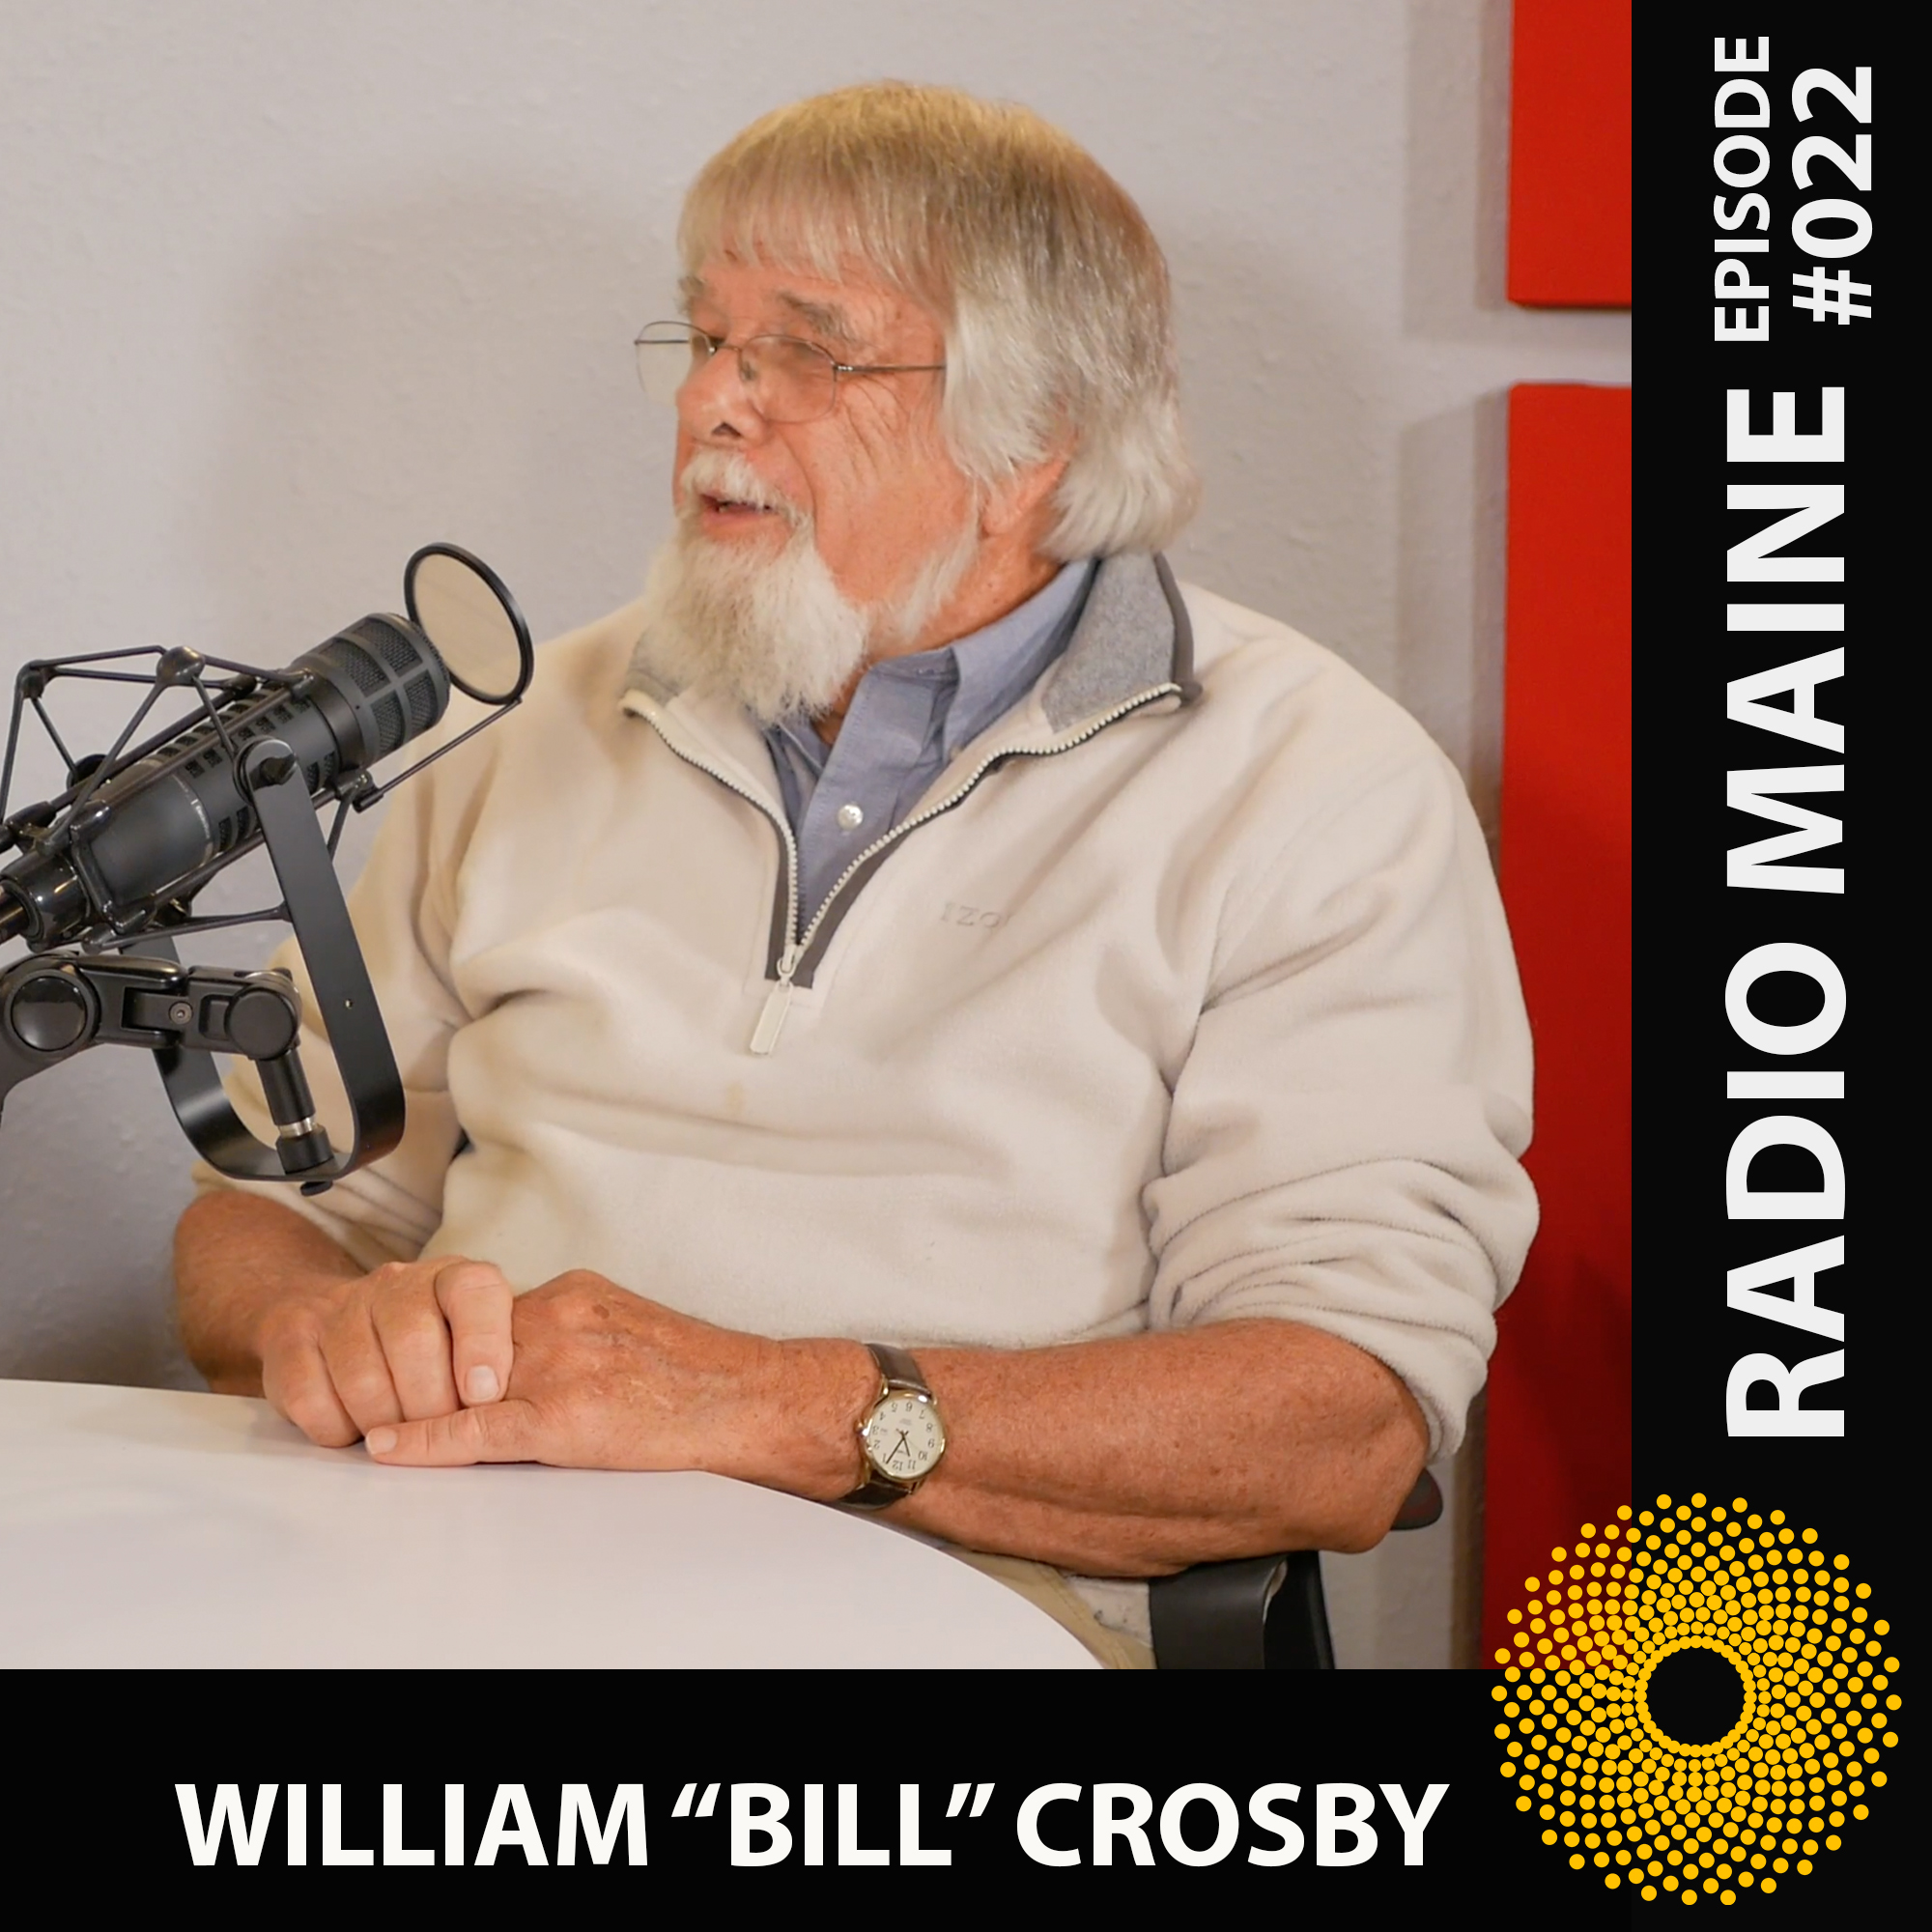 Maine artist William "Bill" Crosby being interviewed on Radio Maine with Dr. Lisa Belisle